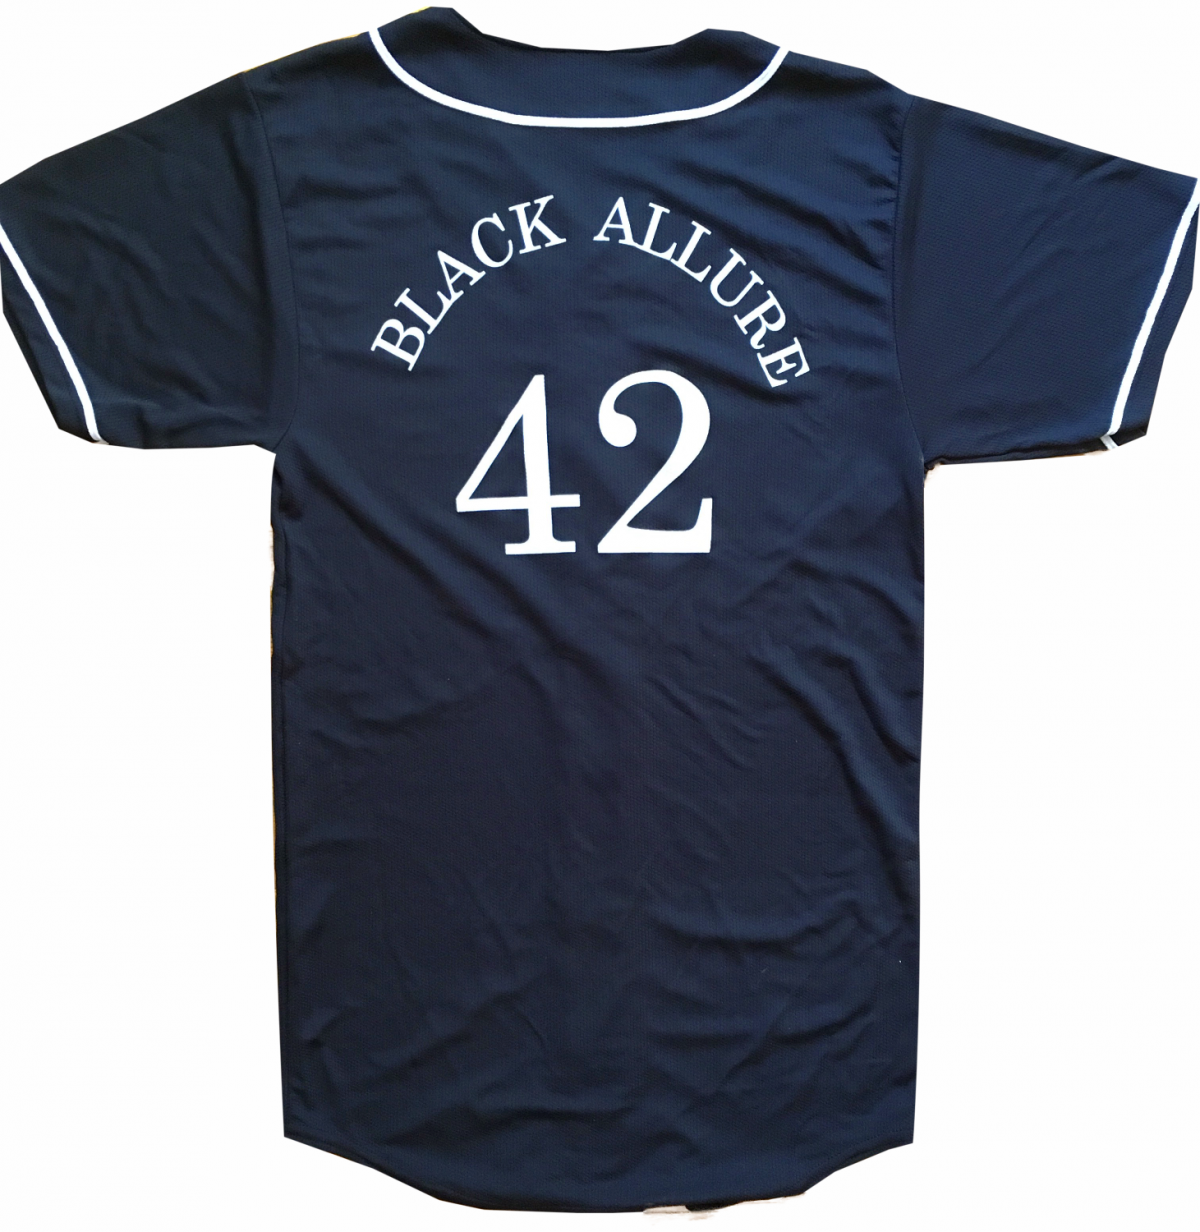 Black Allure Baseball Jersey Black
